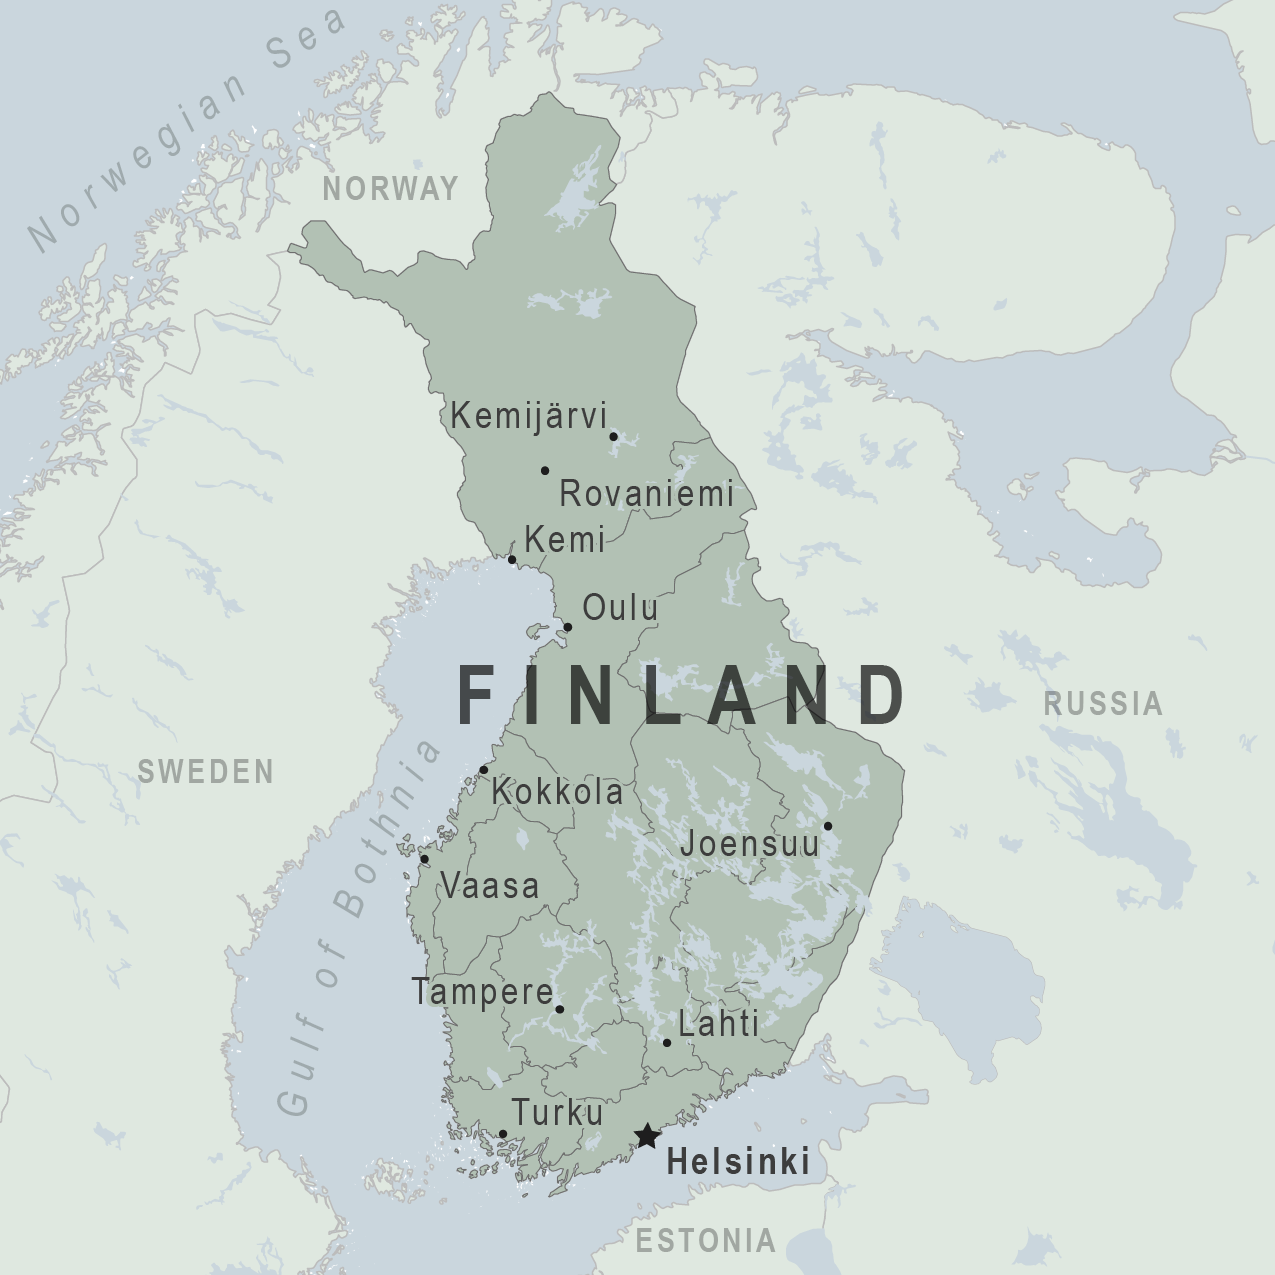 Finland - Traveler view | Travelers' Health | CDC